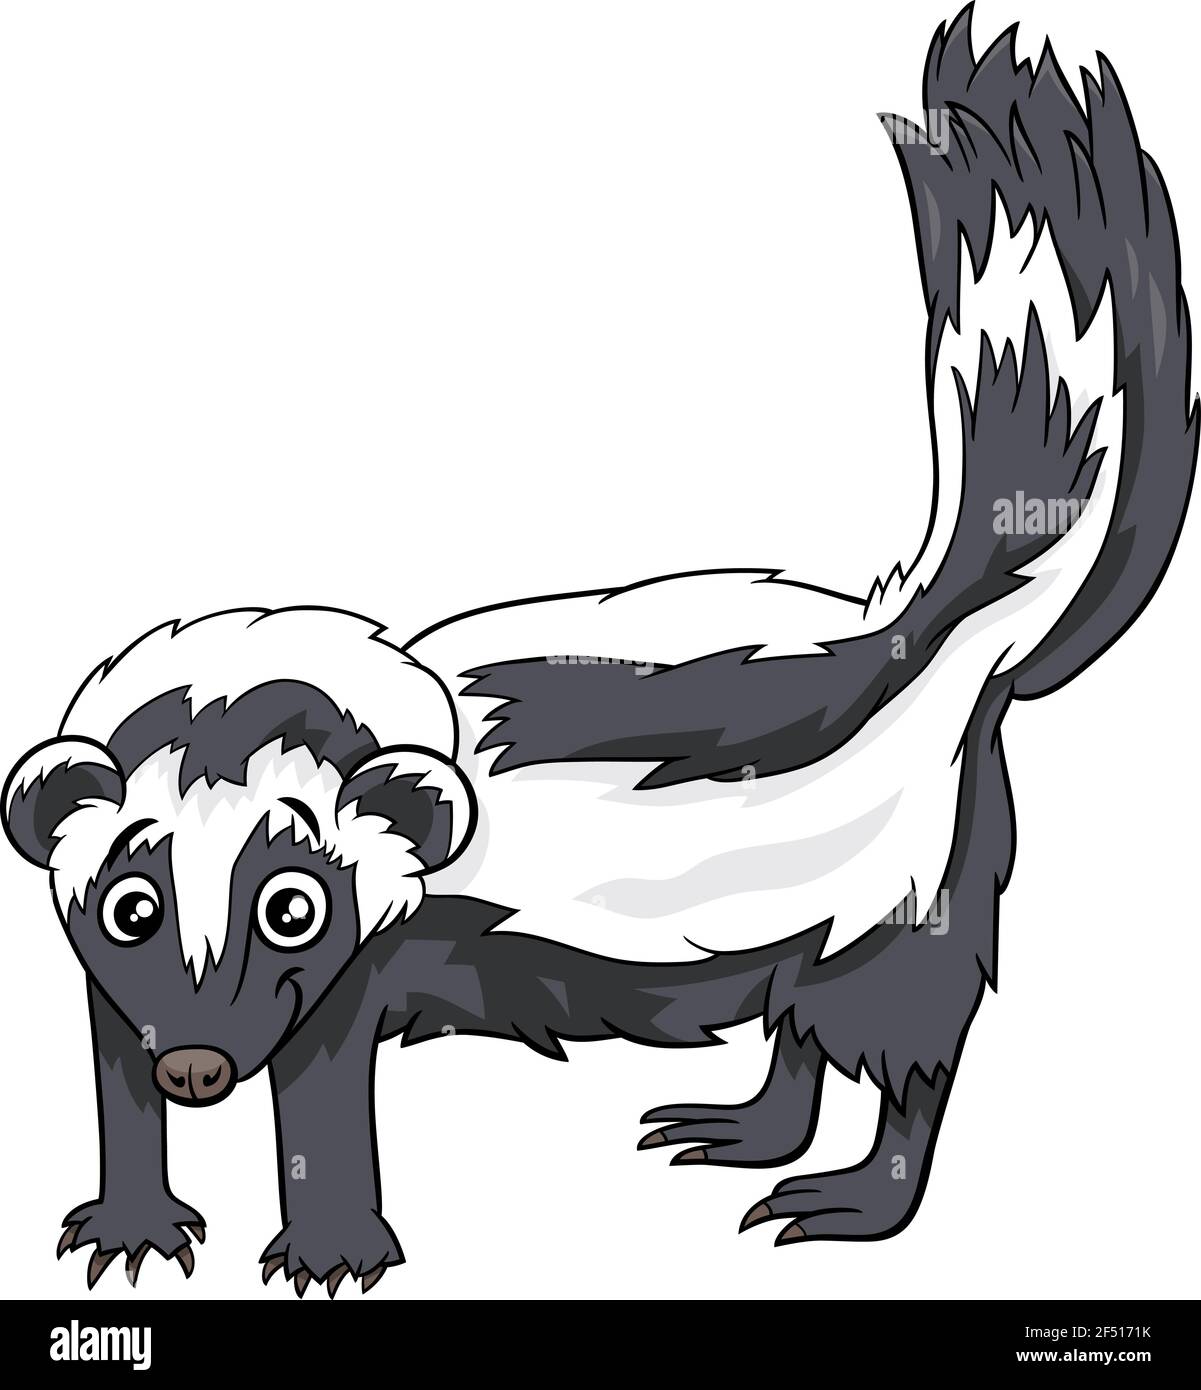 Cartoon illustration of zorilla or striped polecat comic animal character Stock Vector